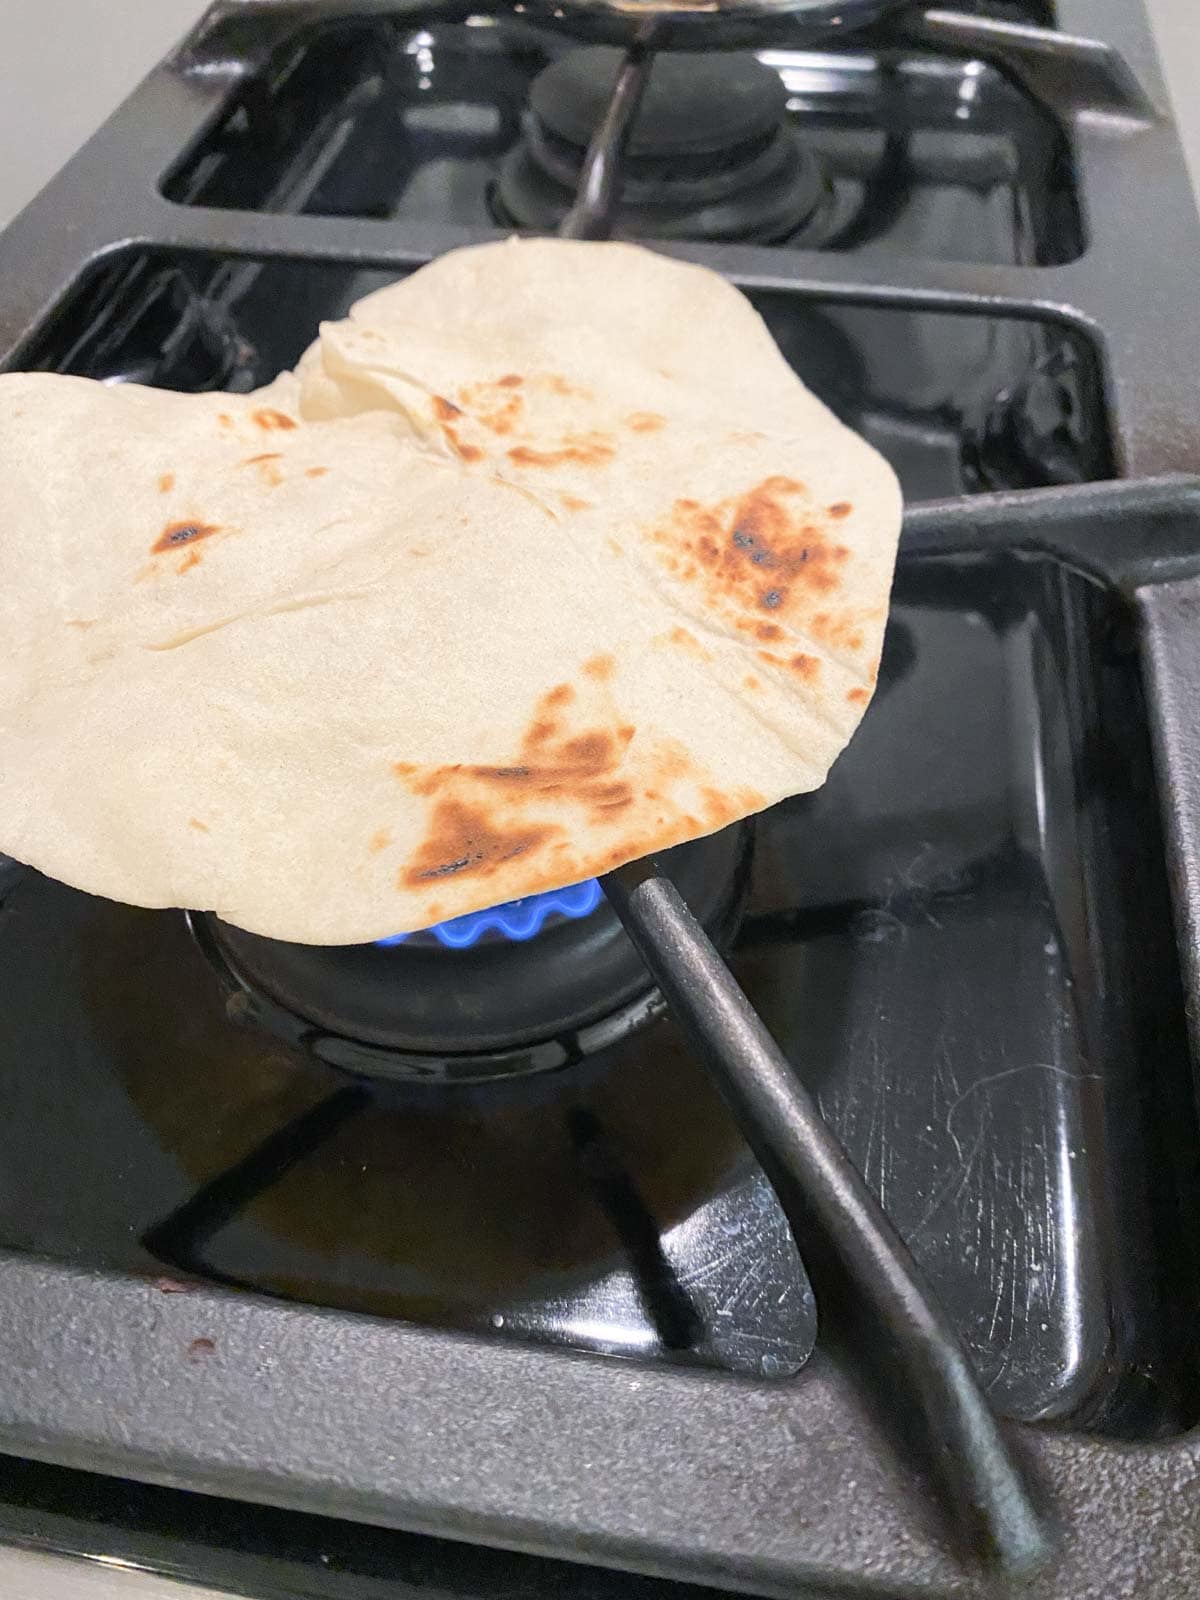 Cooking a tortilla over a gas stove